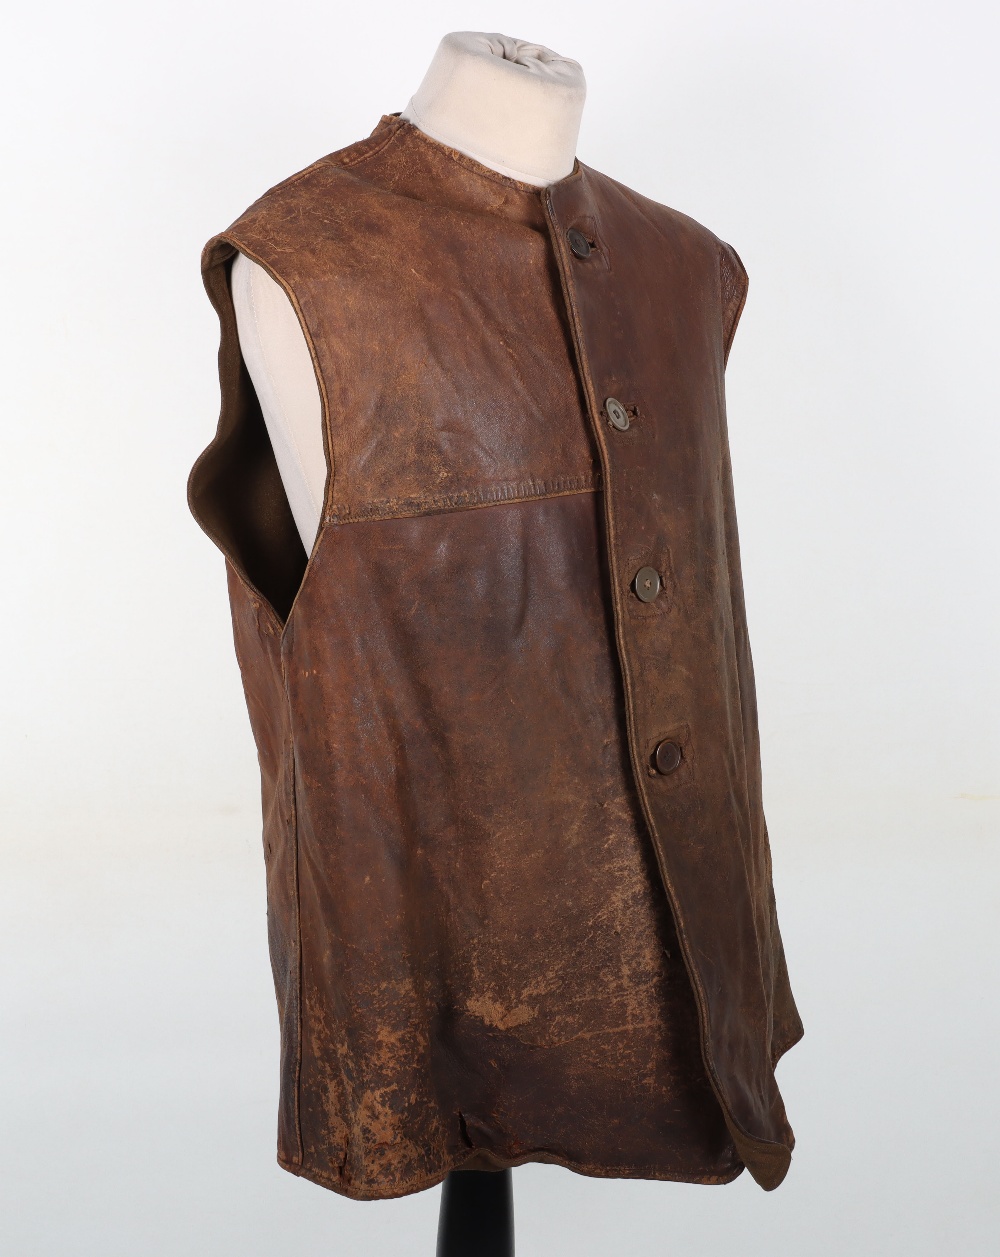 WW2 British Leather Jerkin - Image 2 of 6